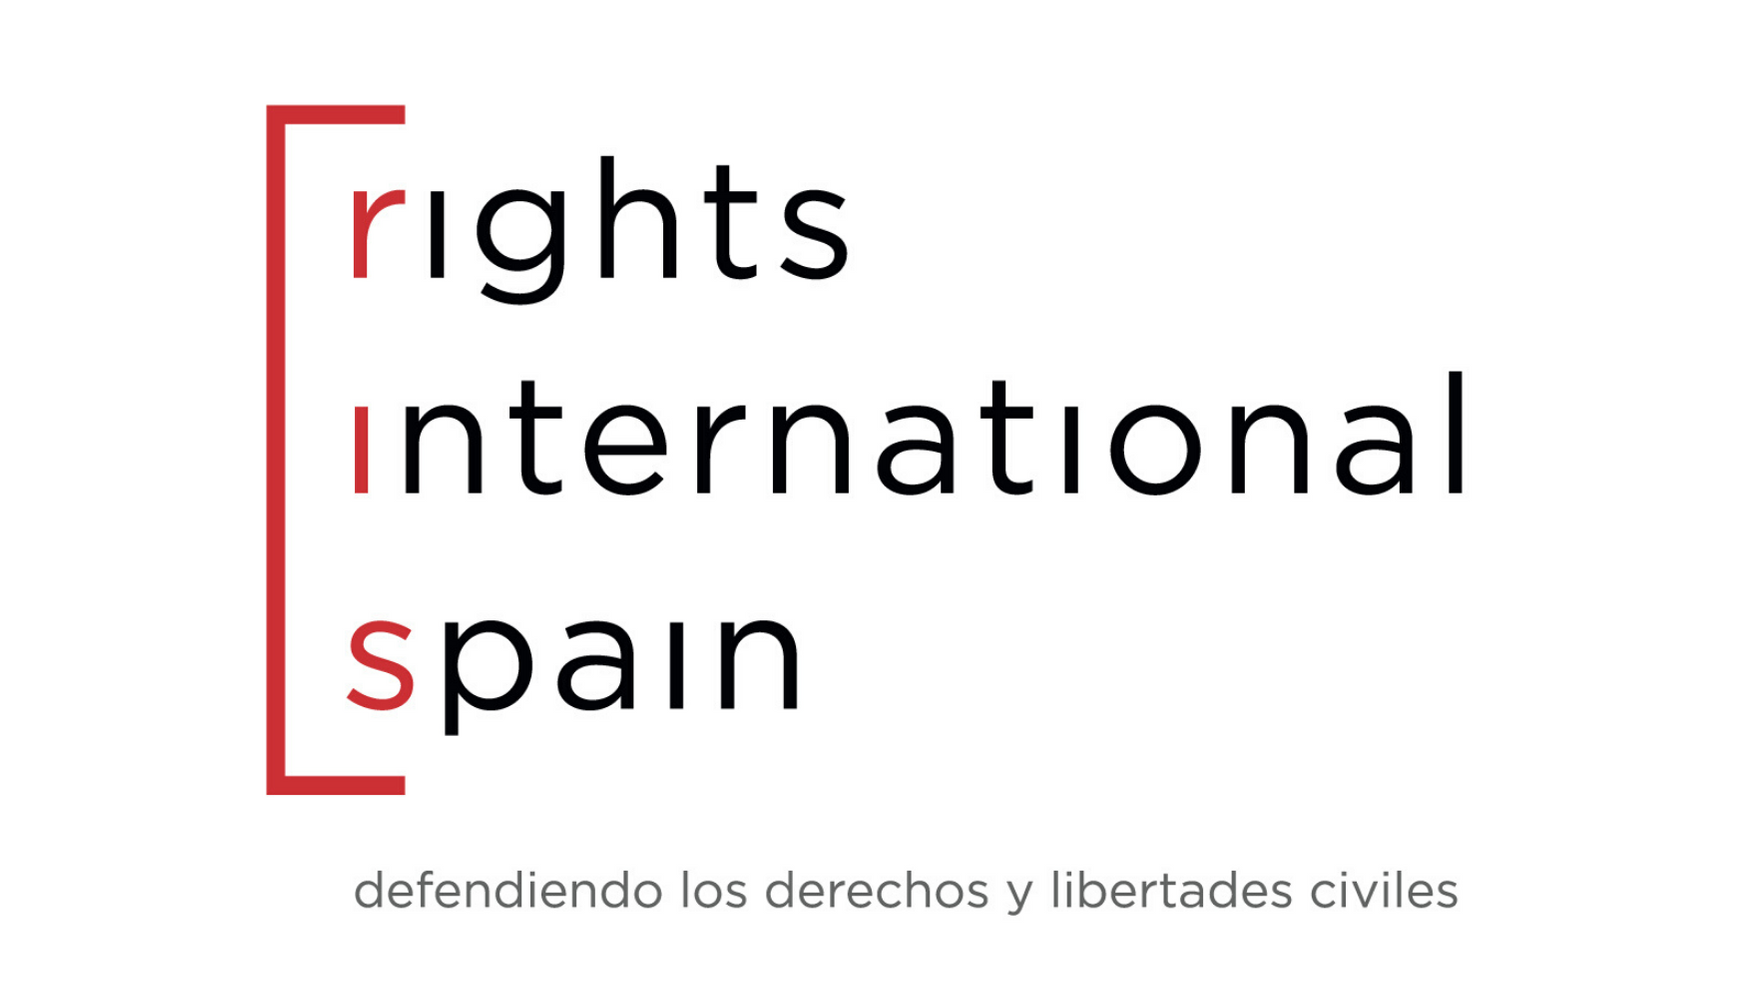 Rights International Spain